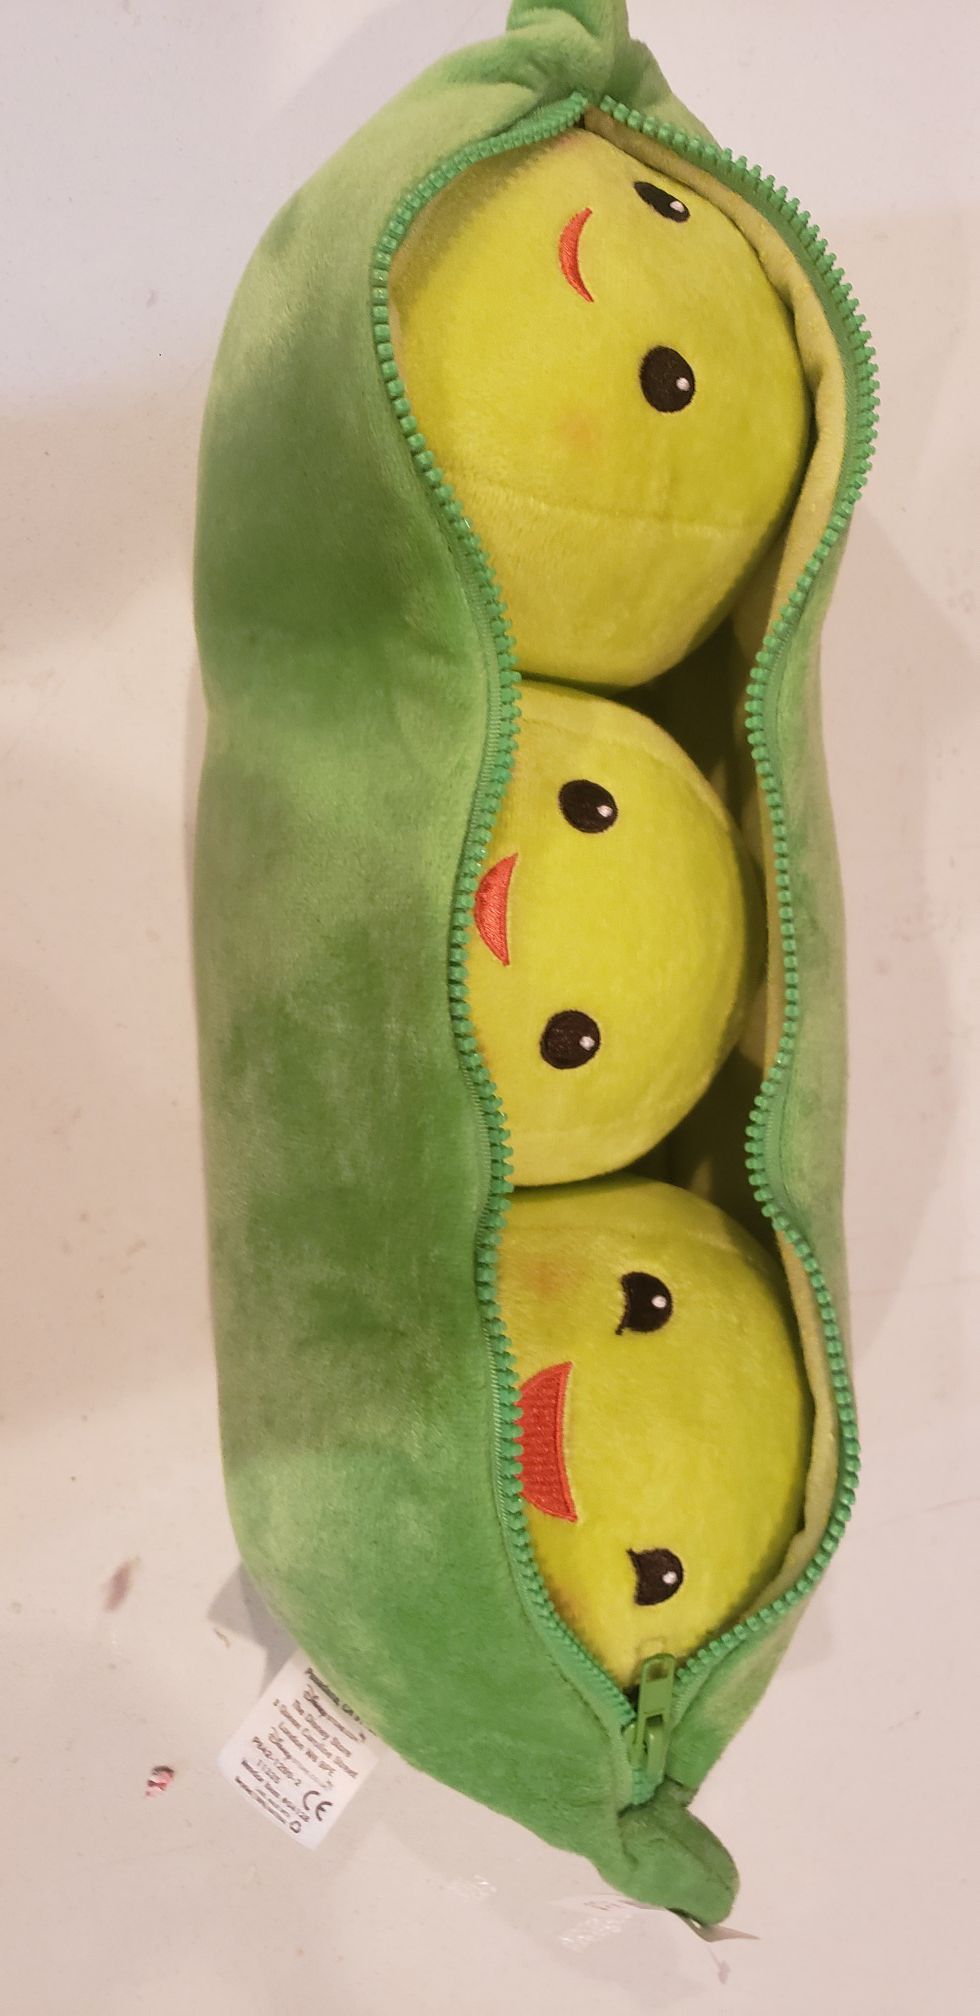 Peas in a pod plushie